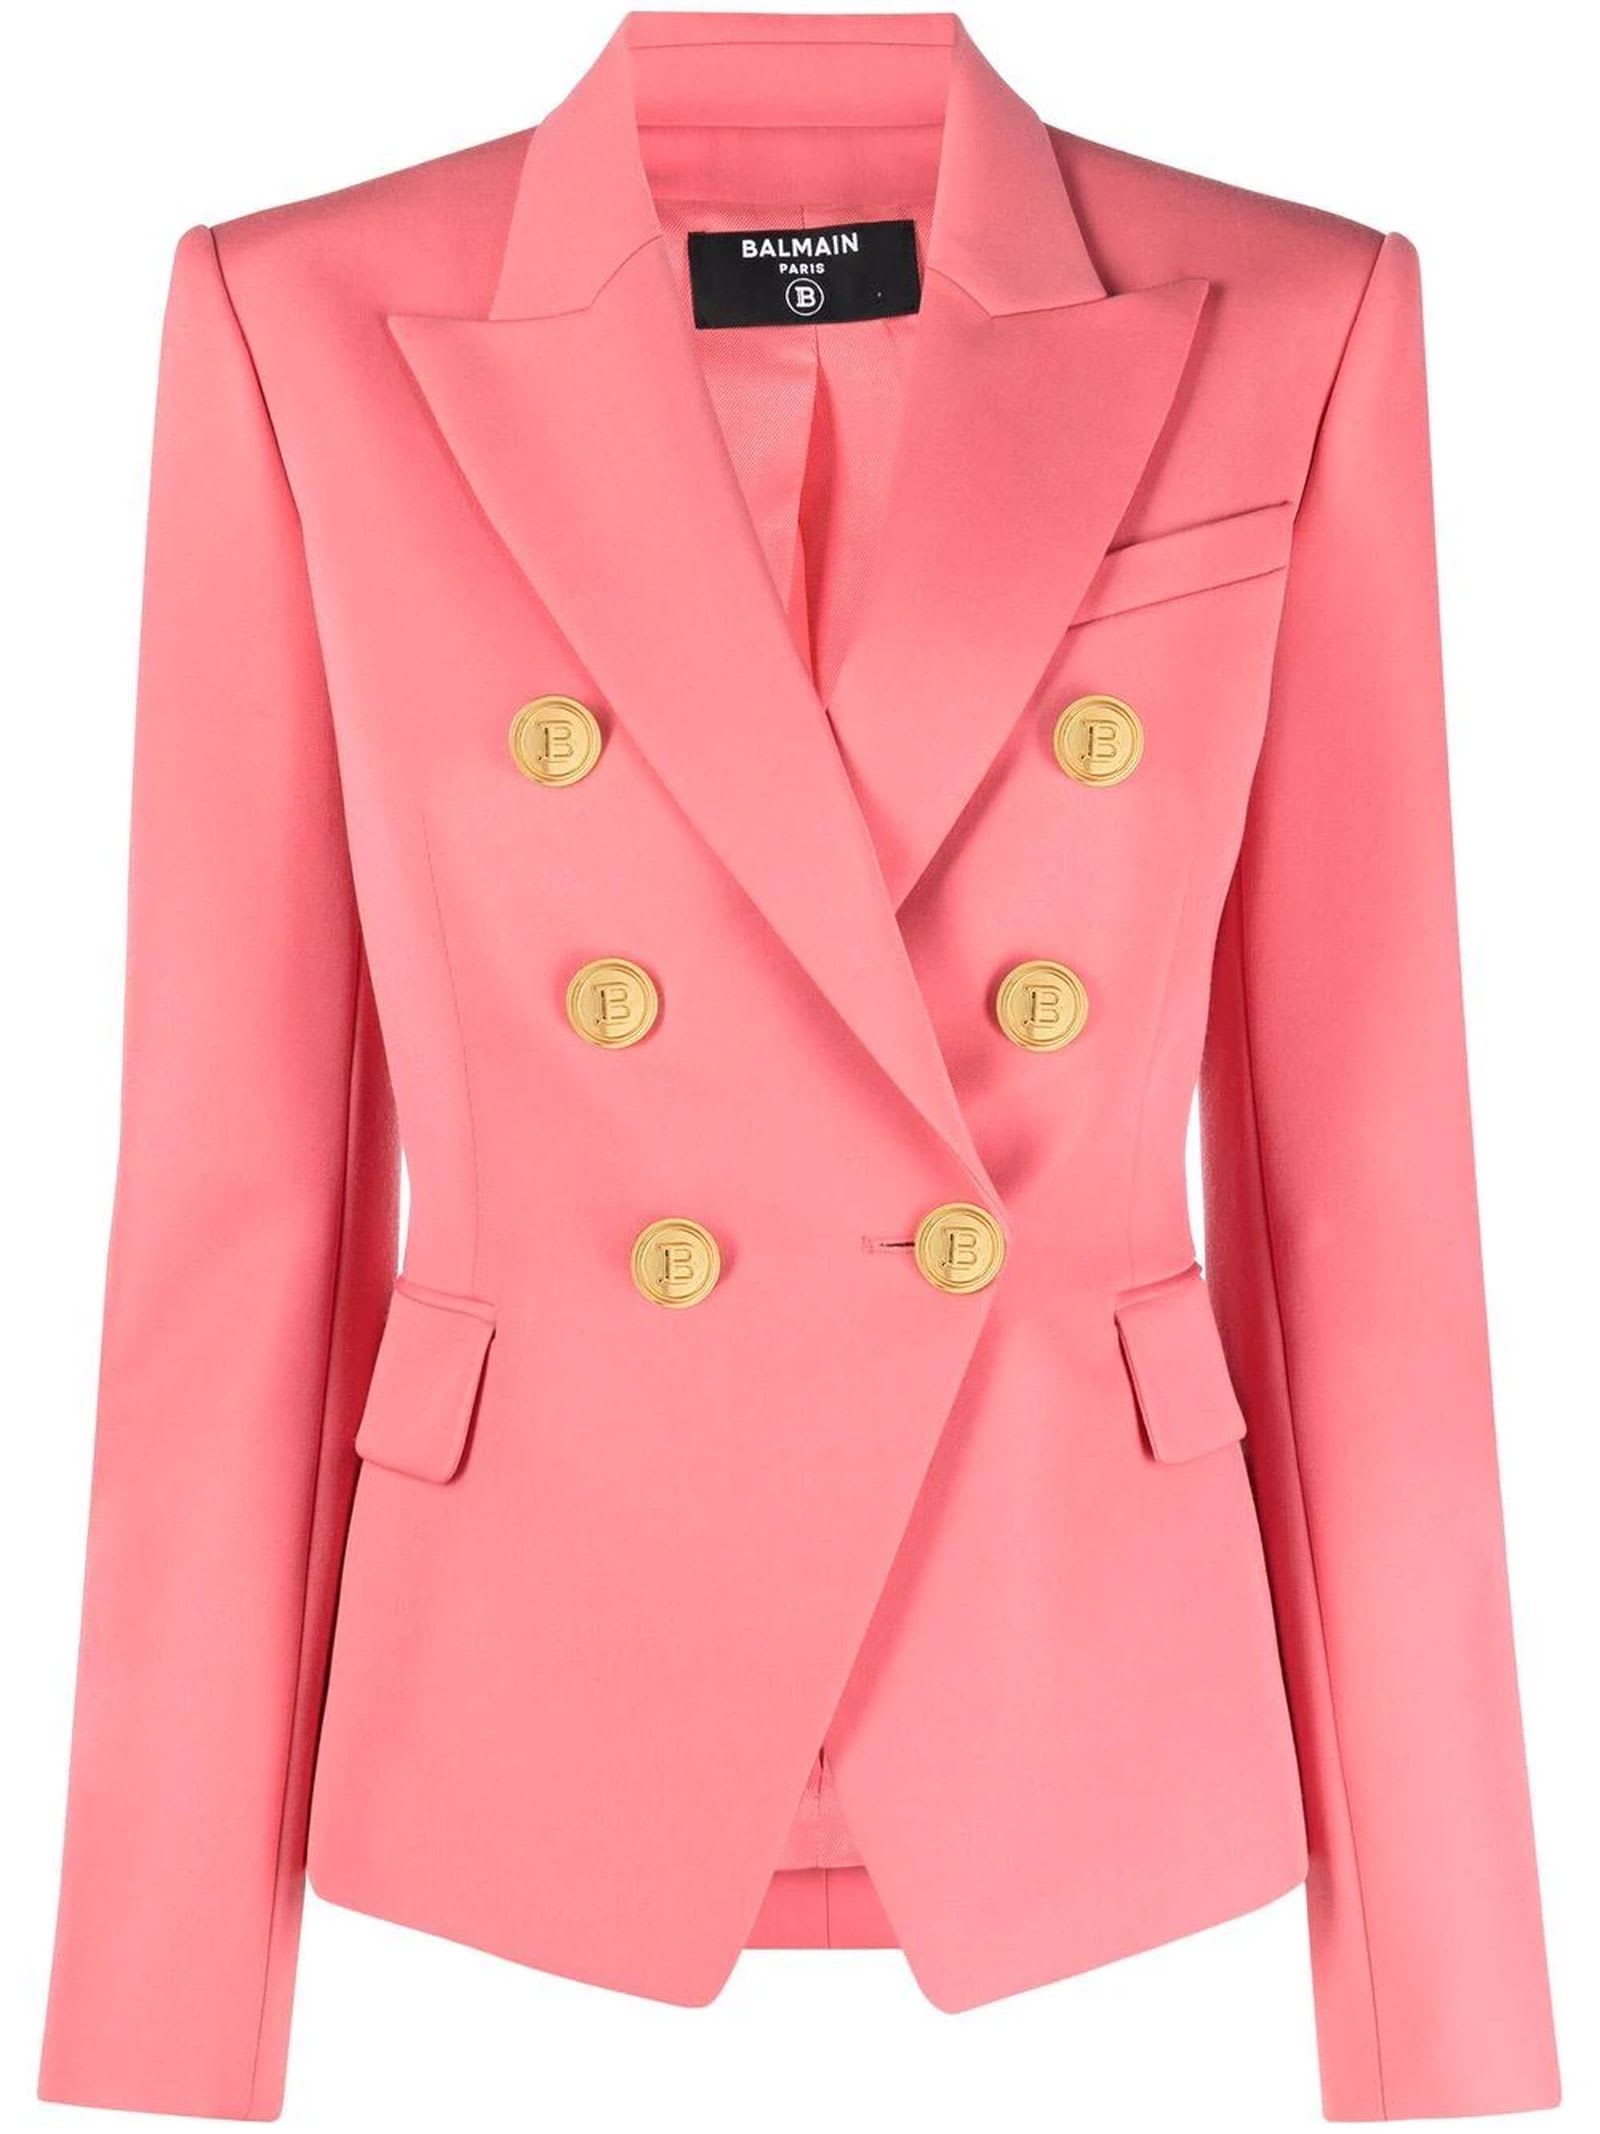 Balmain Salmon Pink Wool Jacket | italist, ALWAYS LIKE A SALE